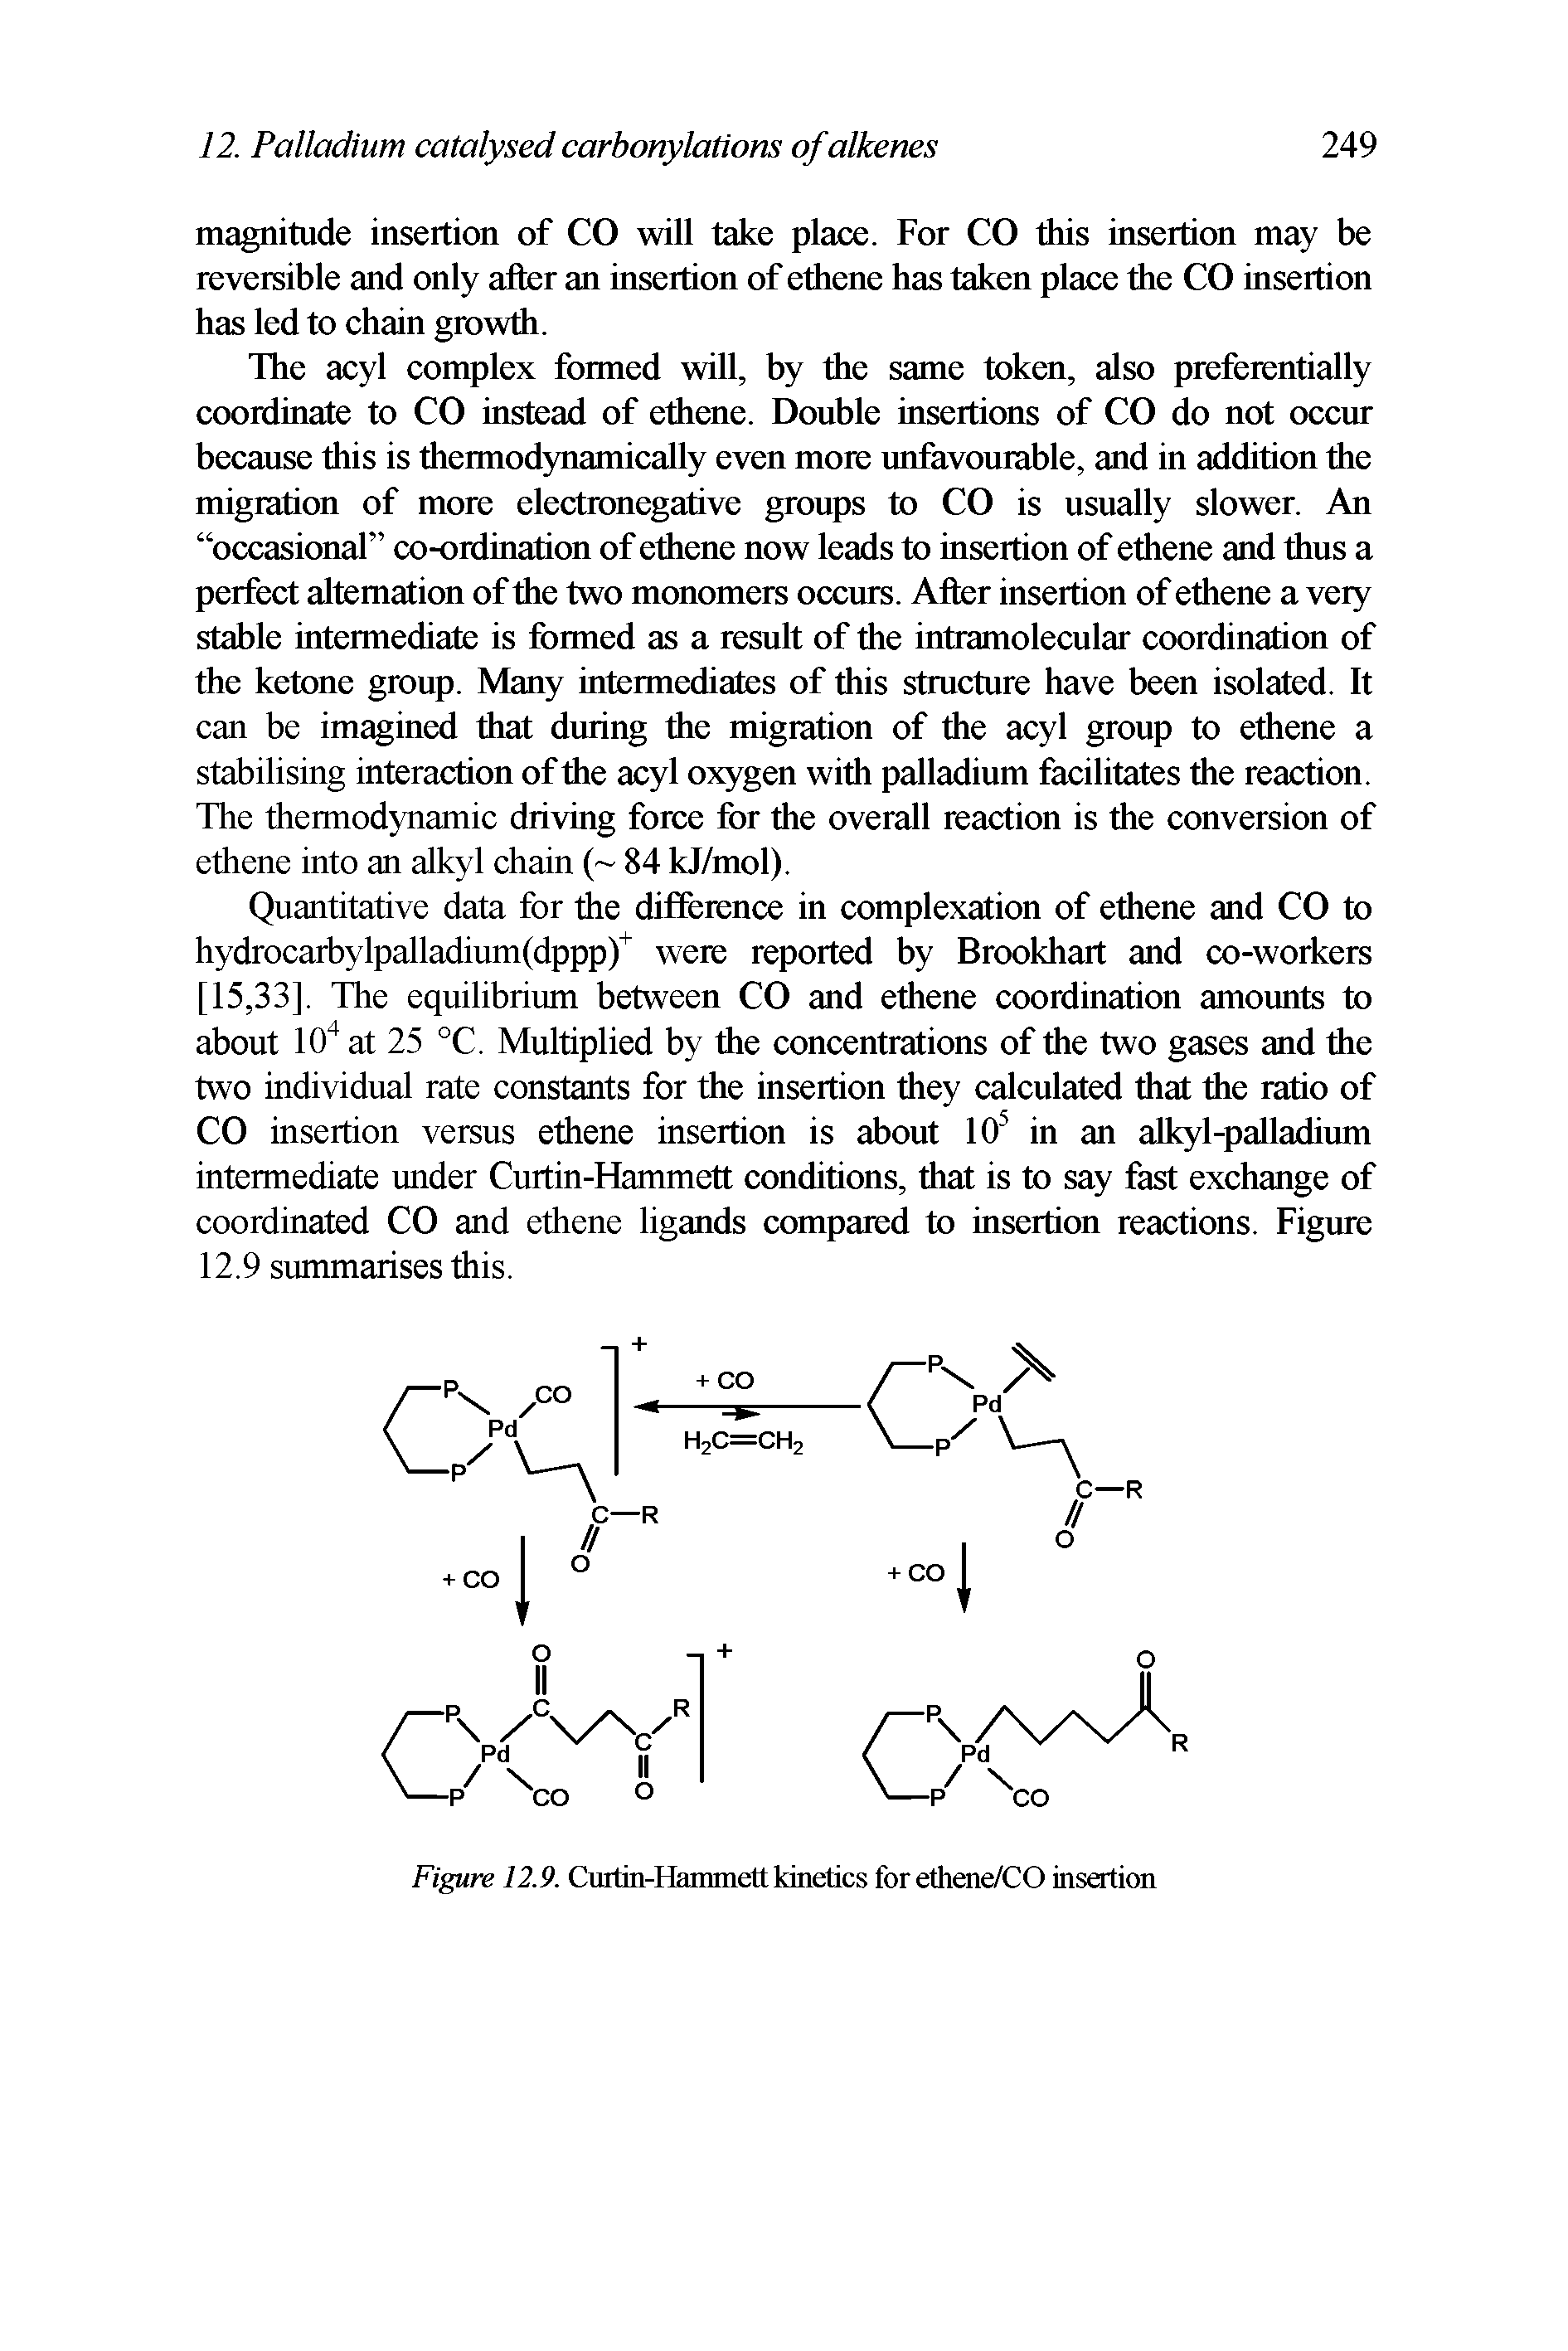 Figure 12.9. Curtin-Hammett kinetics forethene/CO insertion...